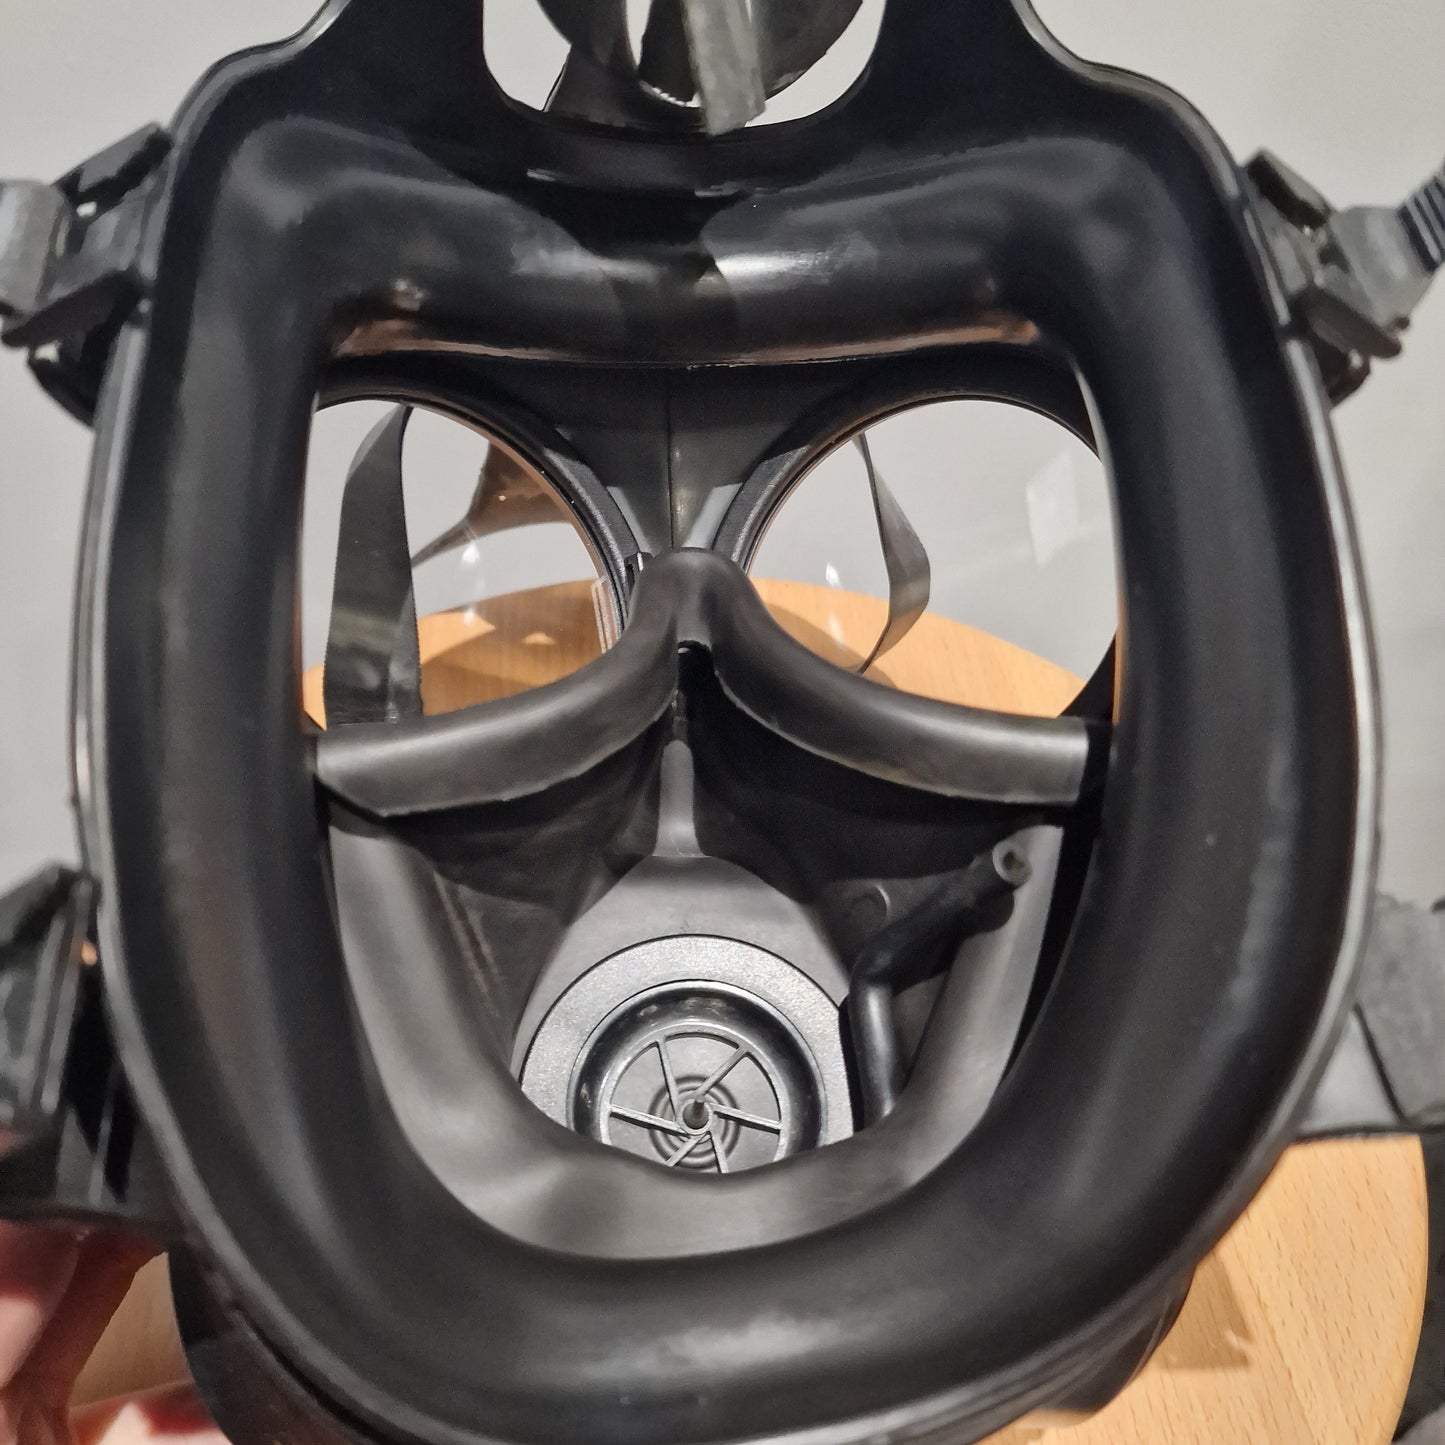 Avon S10 Gas Mask